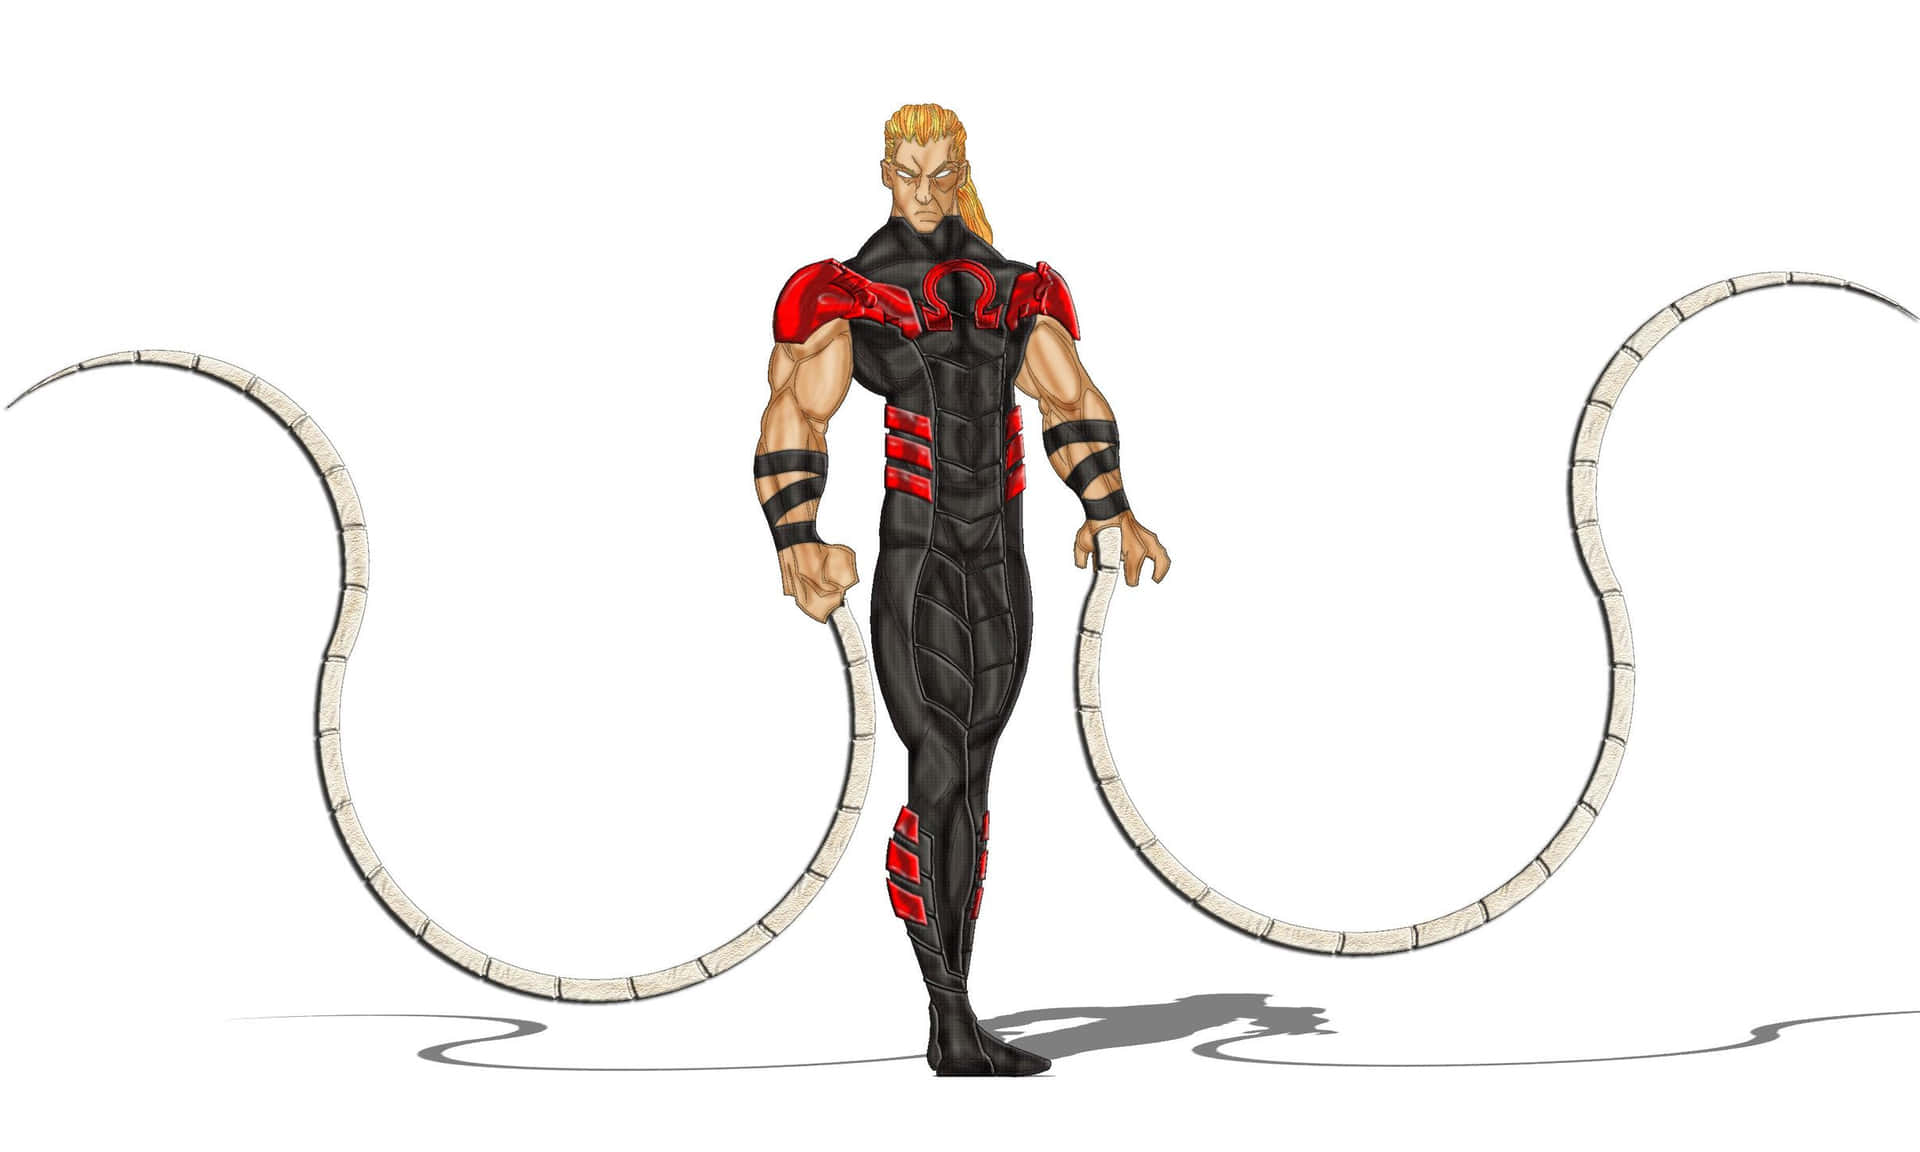 Omega Red - The powerful mutant villain Wallpaper